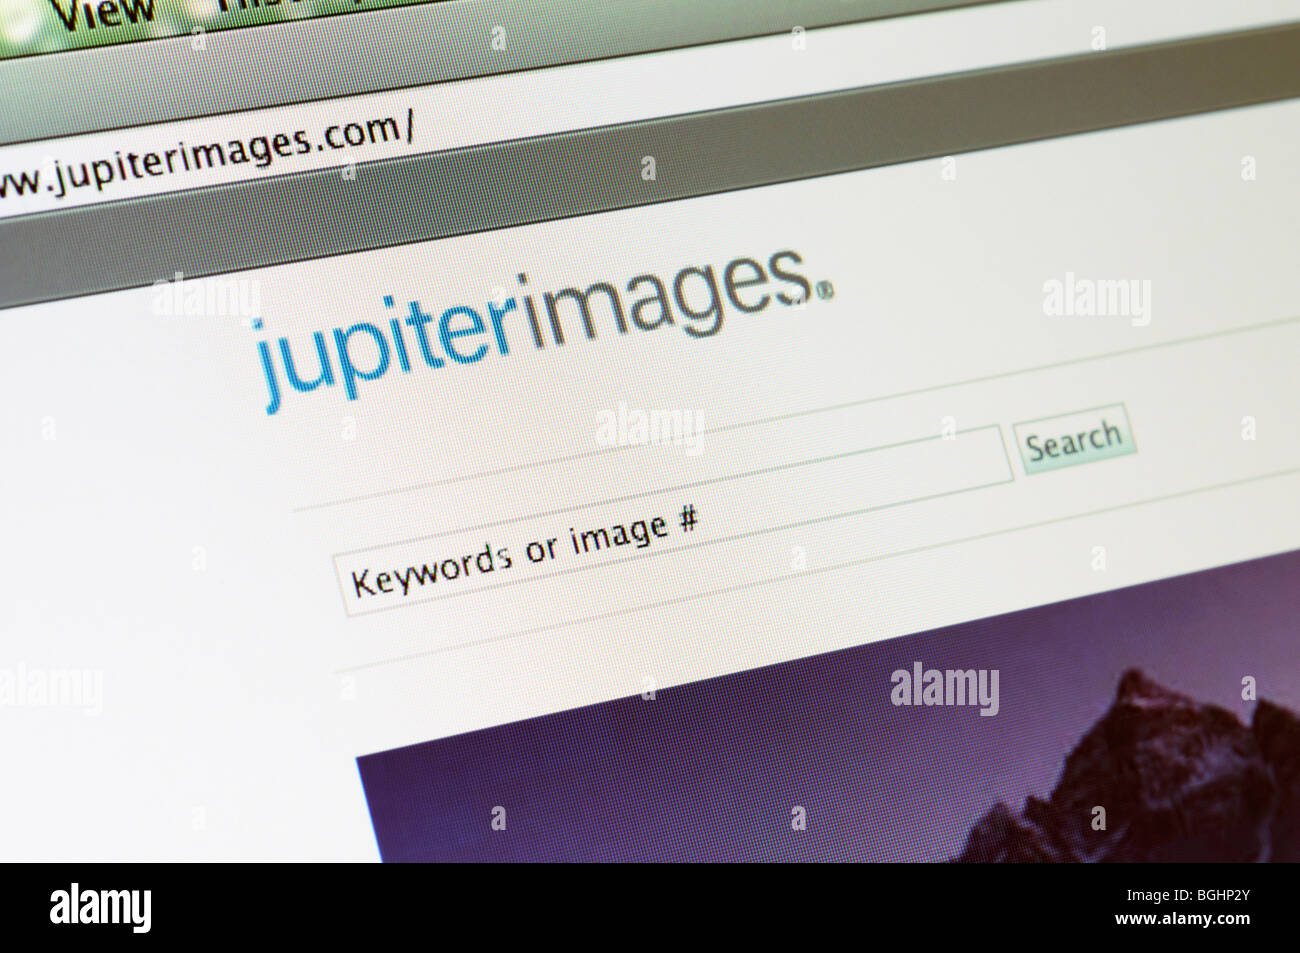 Jupiter image agency website Stock Photo